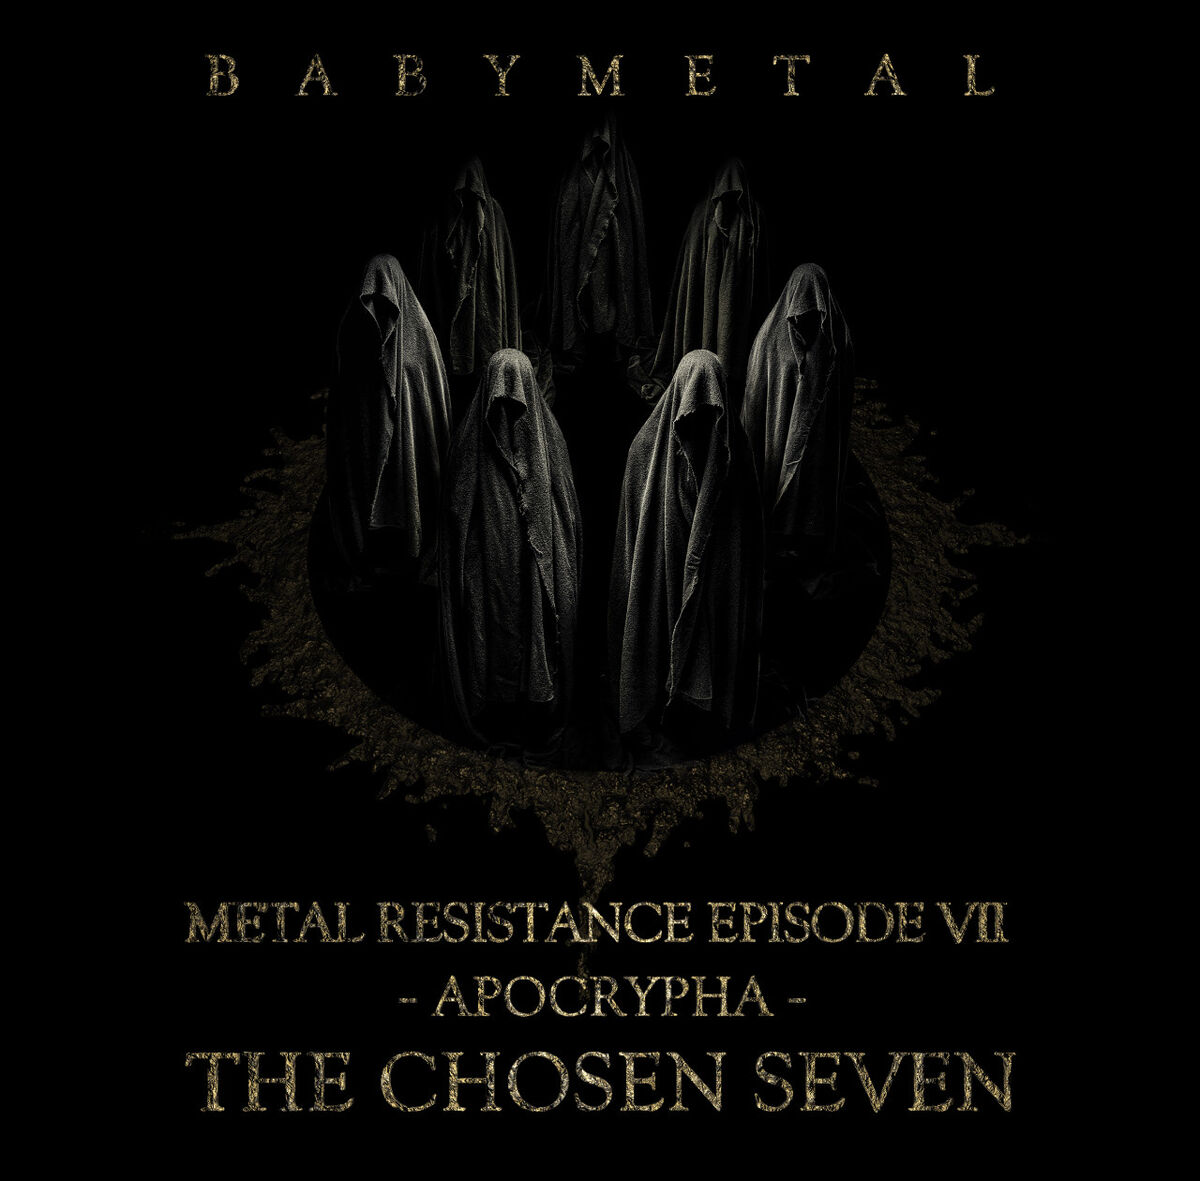 METAL RESISTANCE EPISODE VII - THE CHOSEN SEVEN